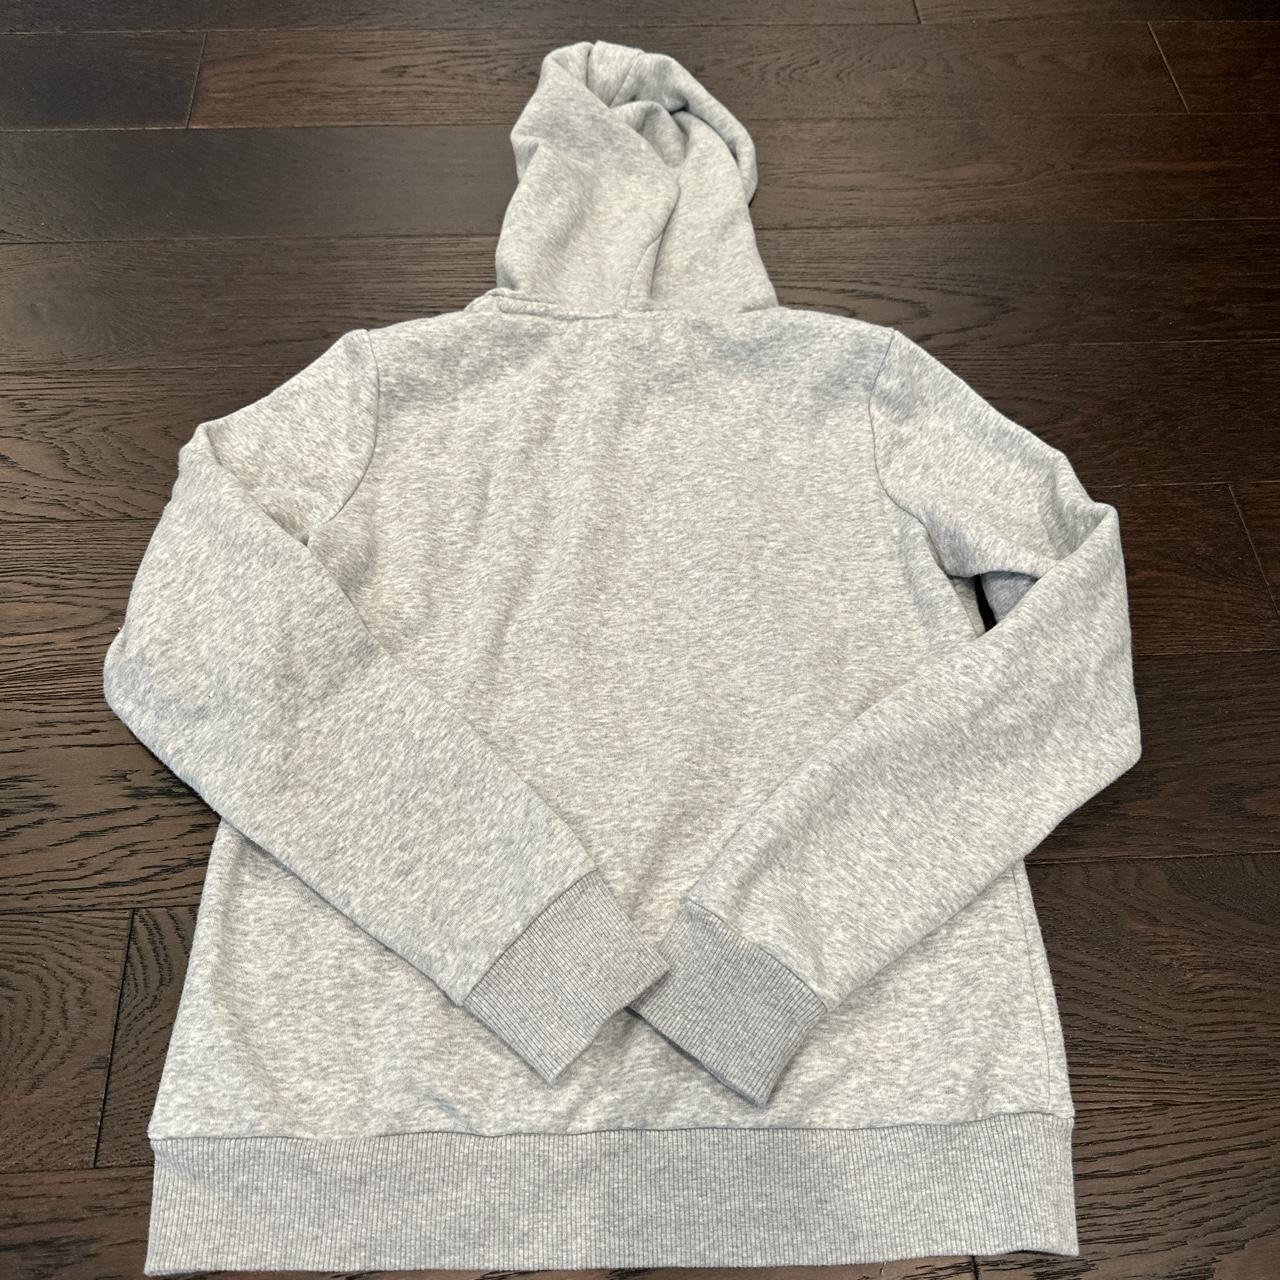 grey puma hoodie size youth medium (fits xxs, could... - Depop